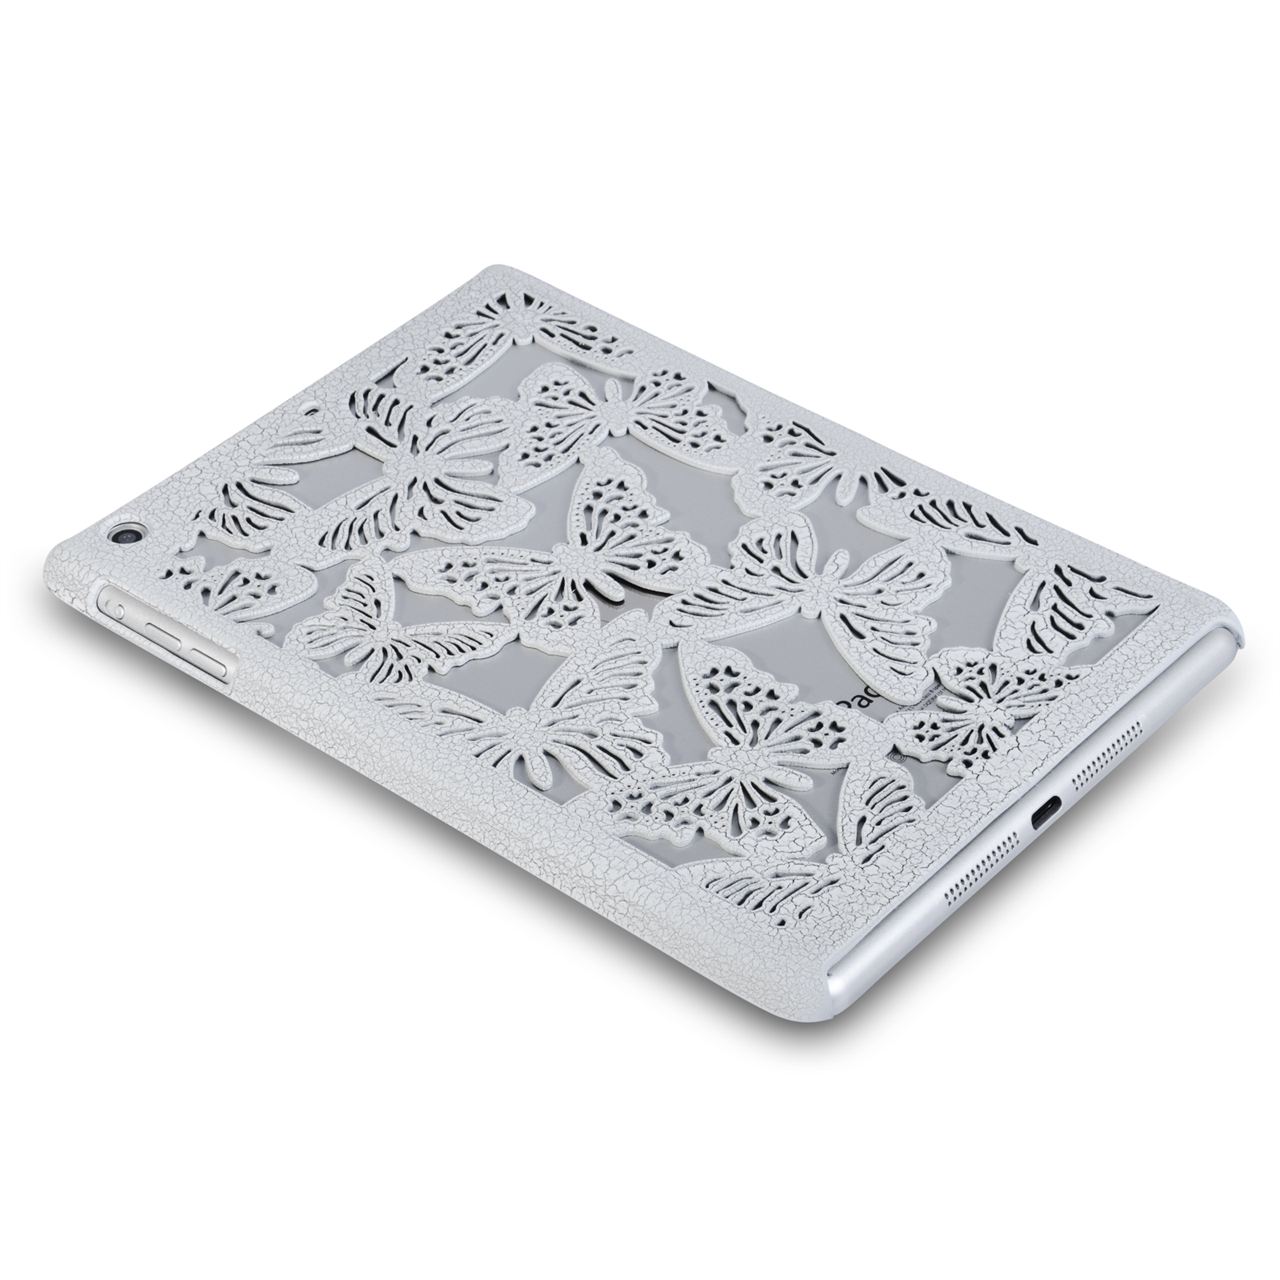 Caseflex iPad Mini 2 Cut Out Butterfly Hard Cover - White